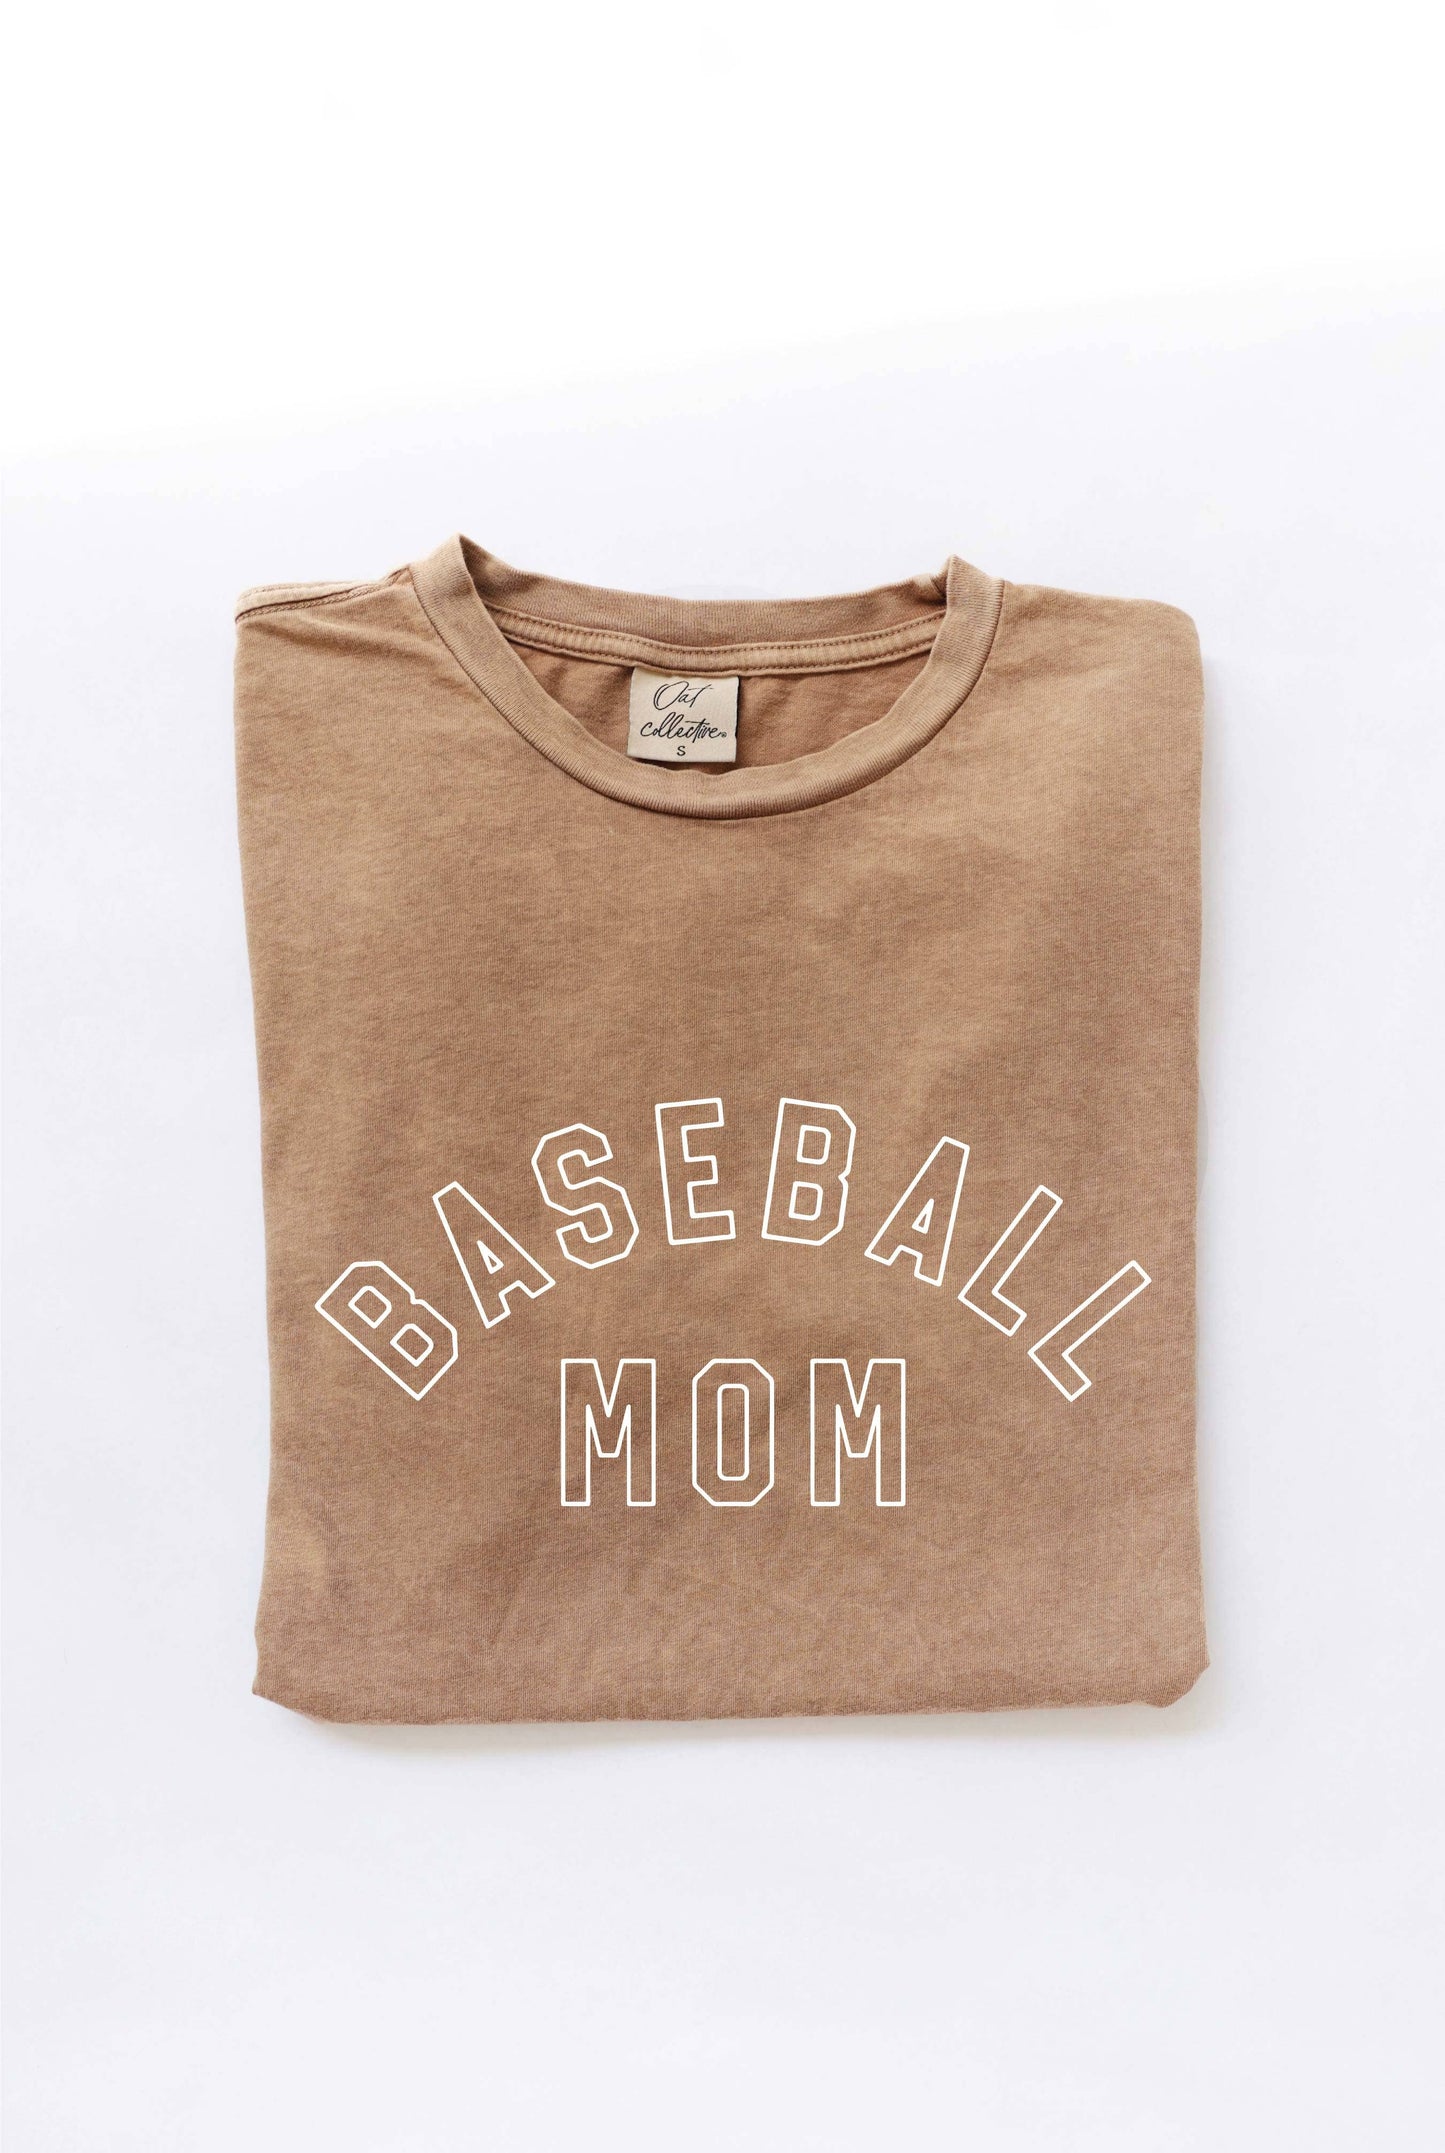 BASEBALL MOM //